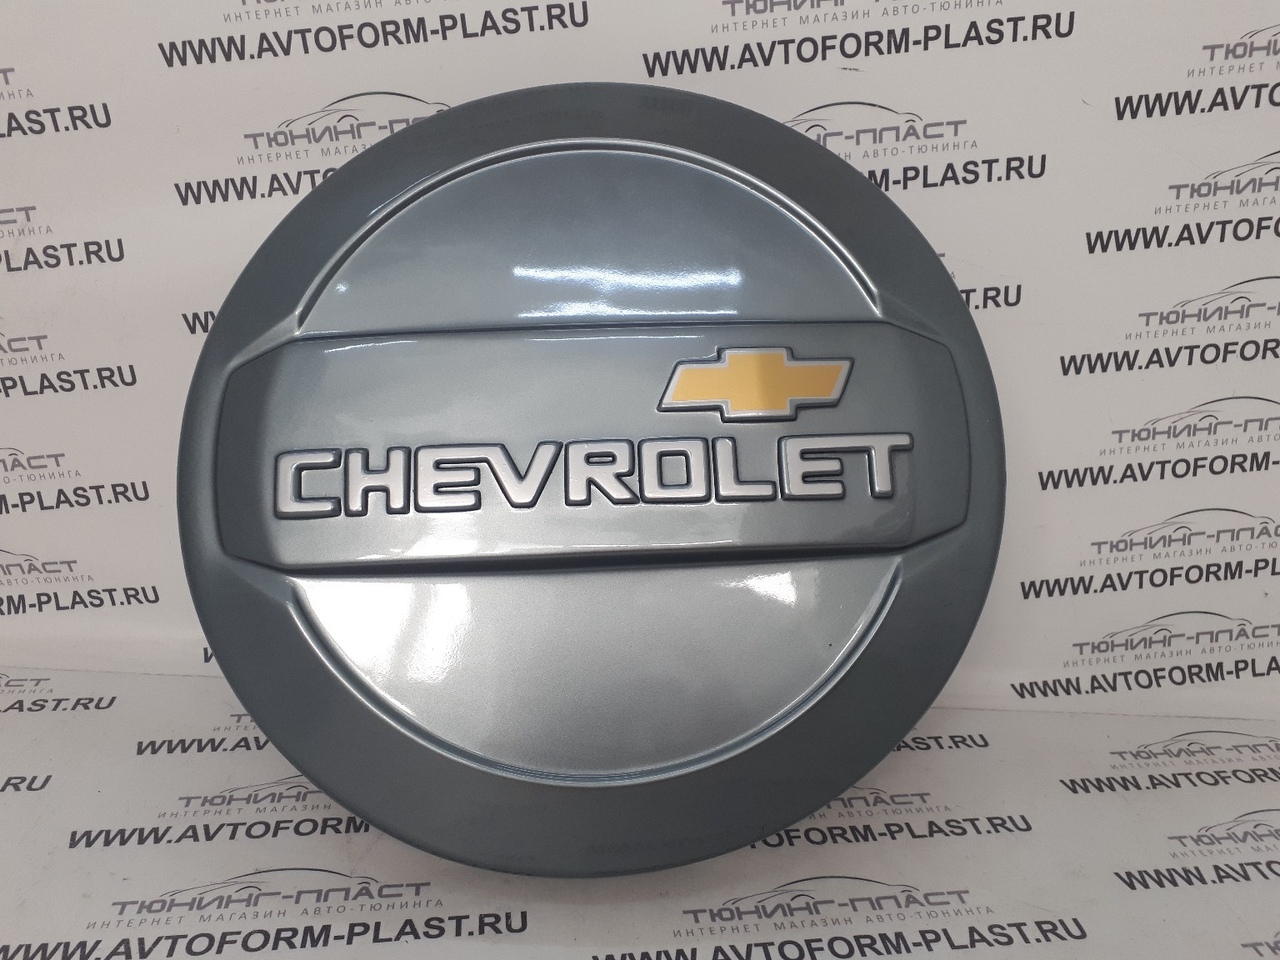 Колпак пластиковый Niva Chevrolet "Chevrolet" (окрашеный)